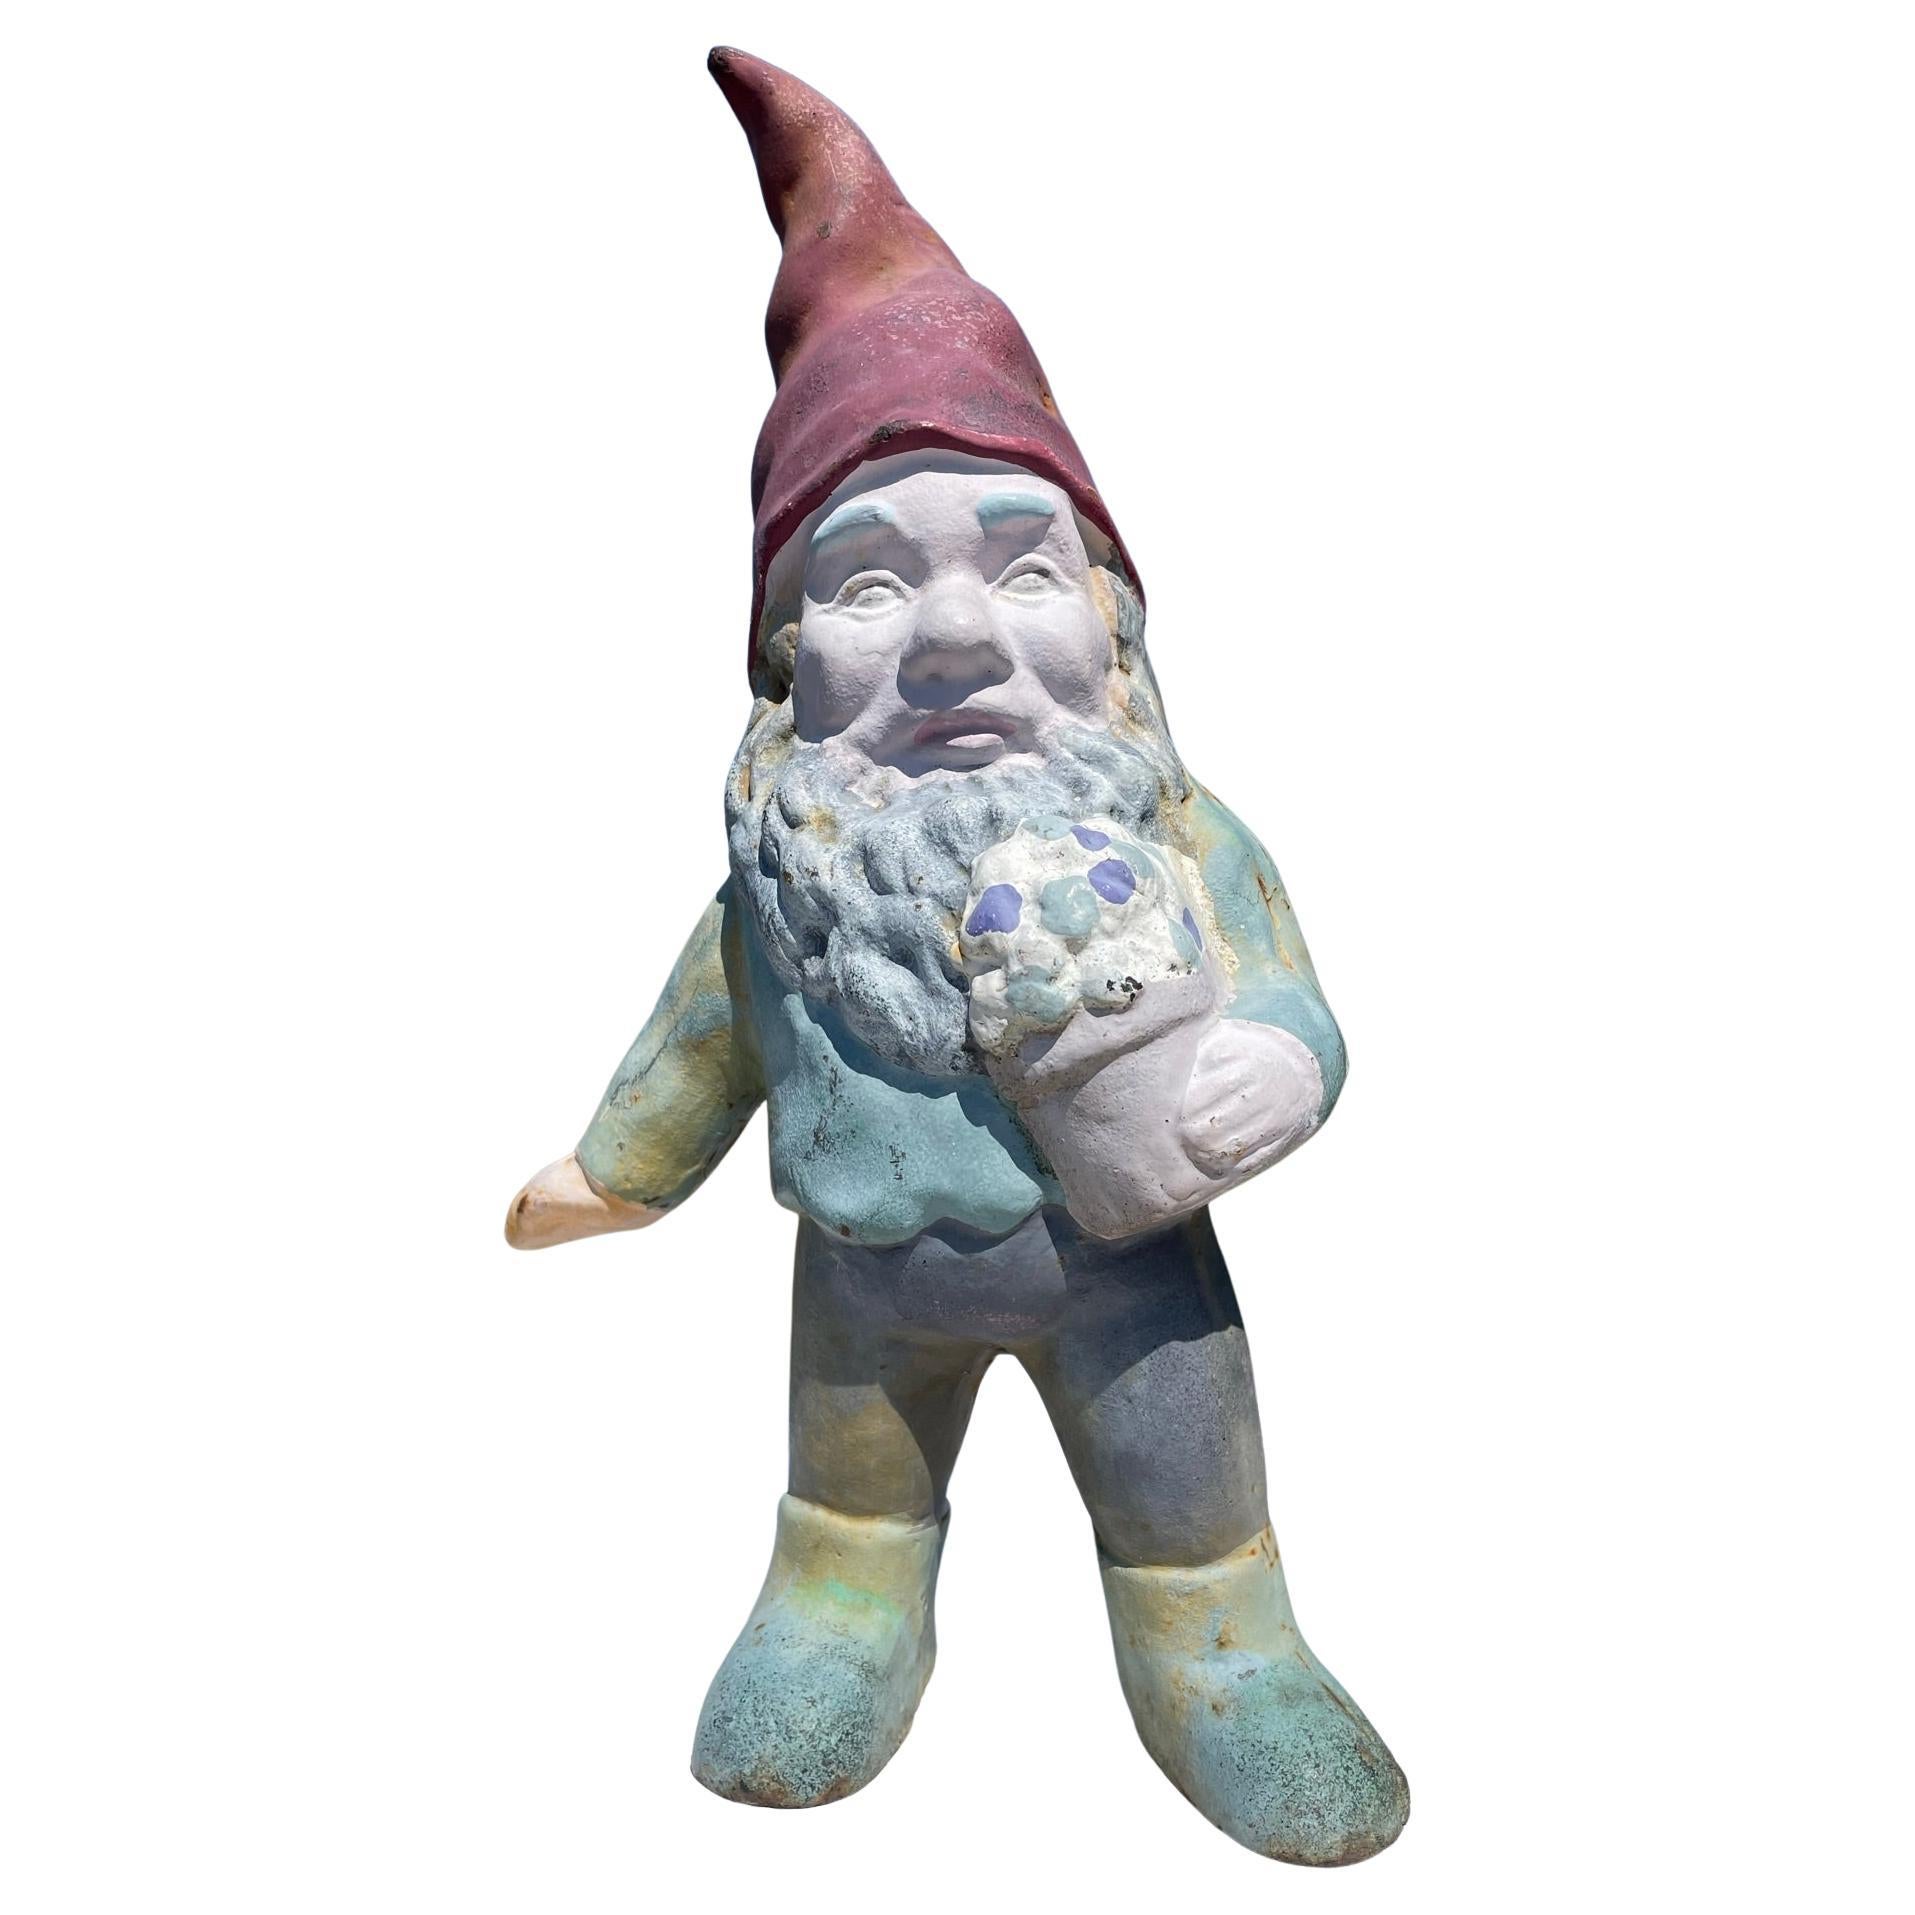 Gnome Garden Sculpture in Original Paint "Flower Pot" For Sale